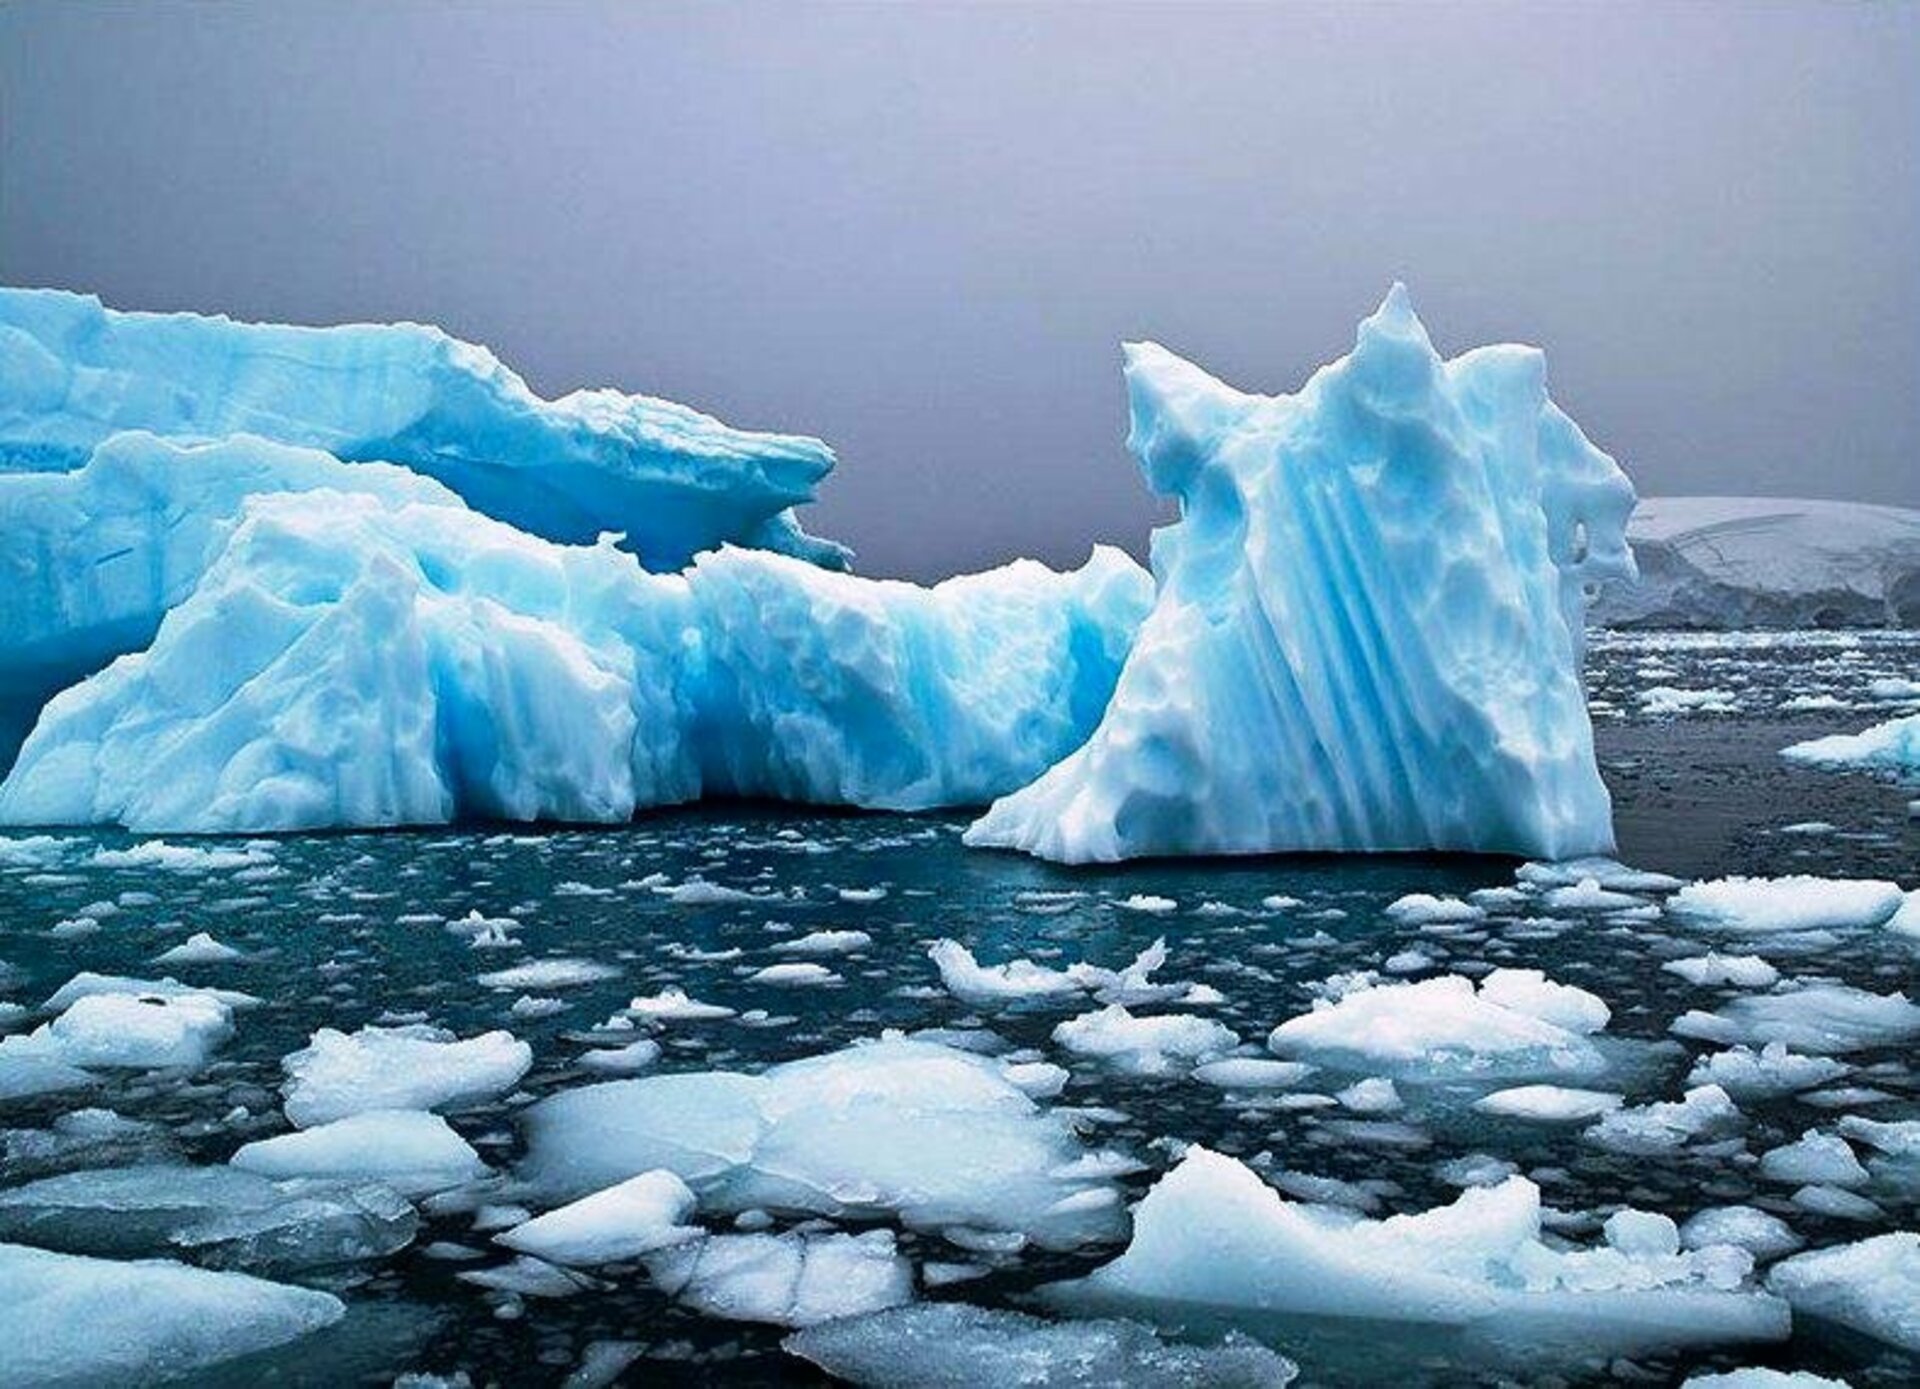 Лед 2 океан. Ледяной Покров Северного Ледовитого океана. Ледники Арктики. Айсберги Северного Ледовитого океана. Льды Северного Ледовитого океана.